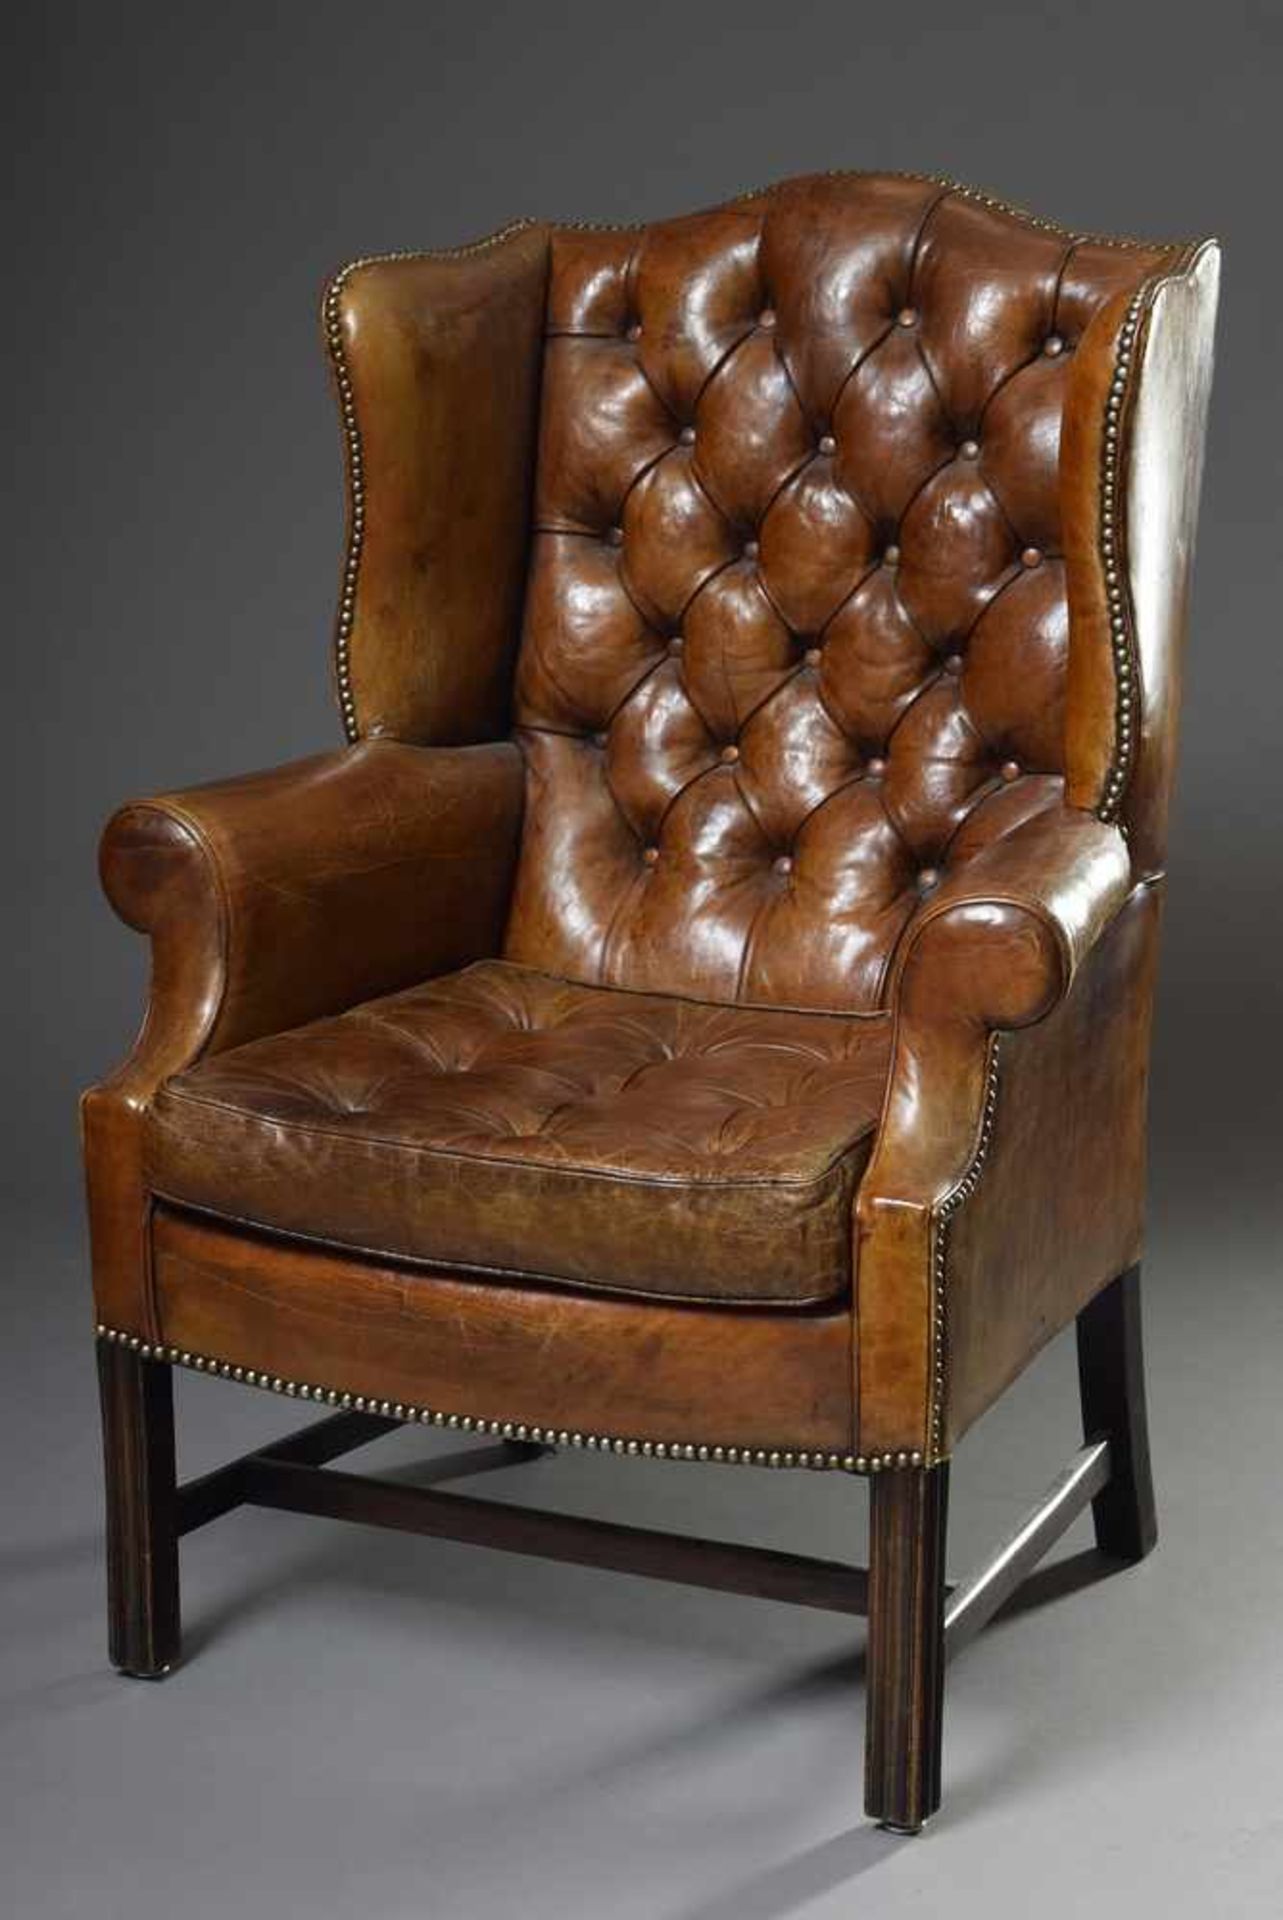 Chesterfield Ohrensessel mit brauen Lederbezug, H. 46/100cmChesterfield wing chair with brown